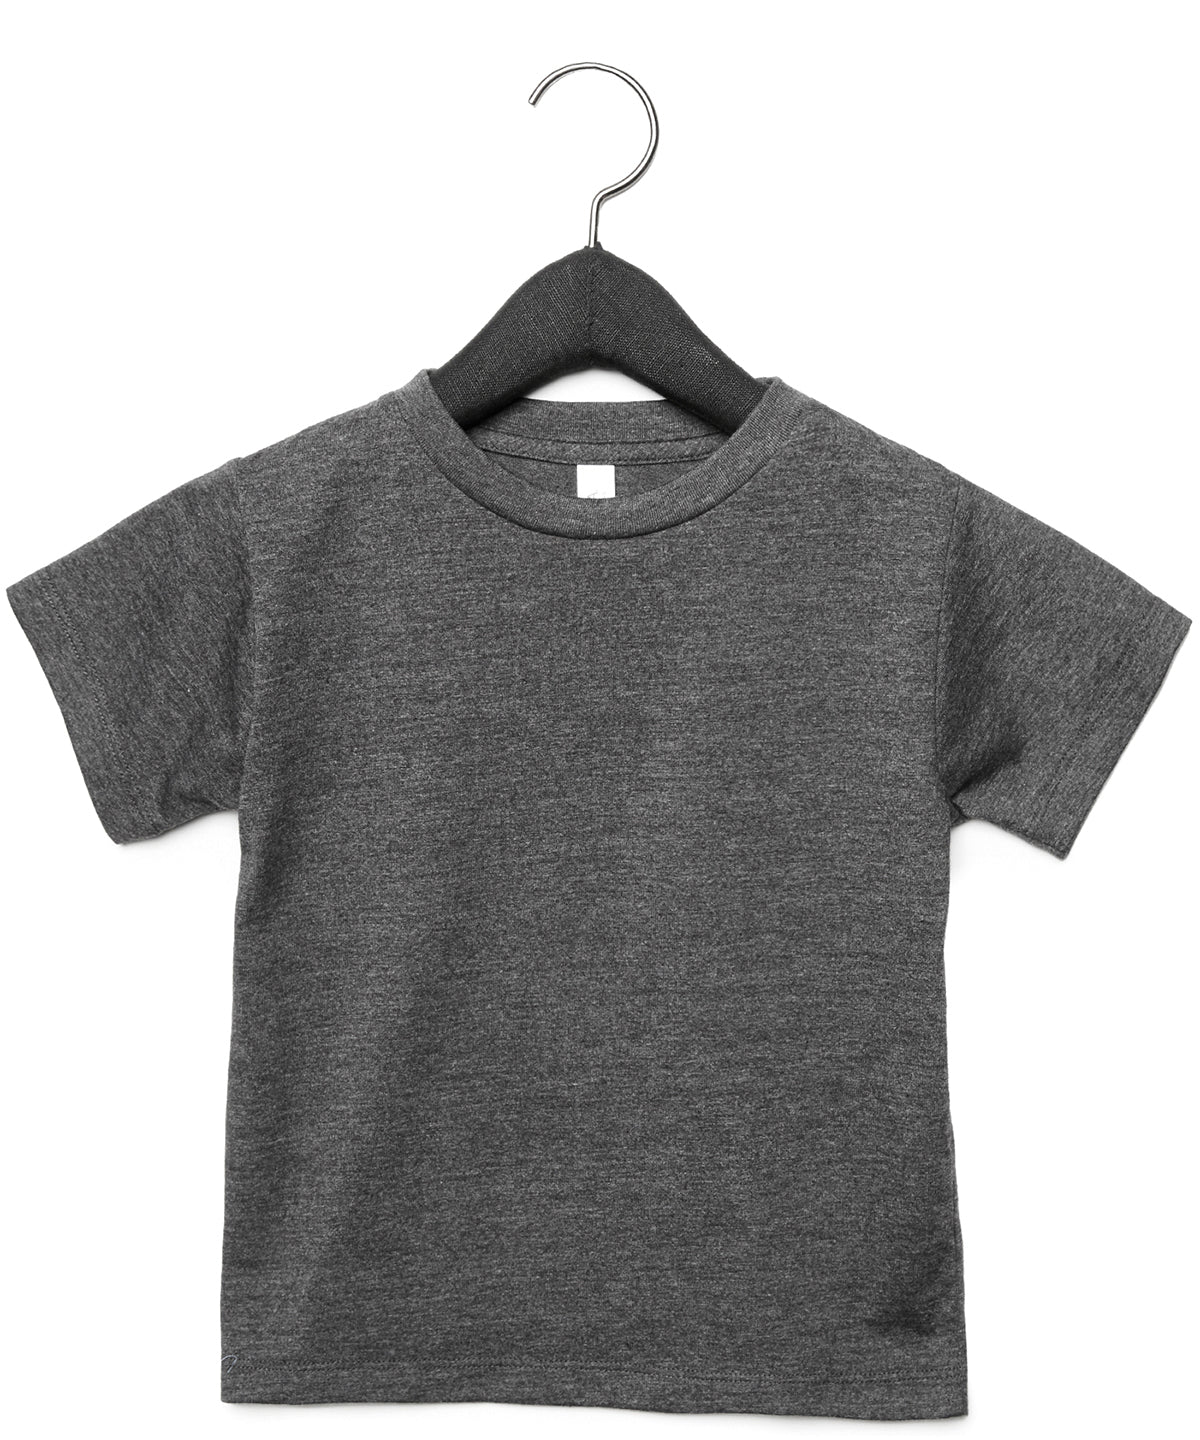 Personalised T-Shirts - Dark Grey Bella Canvas Toddler Jersey short sleeve tee